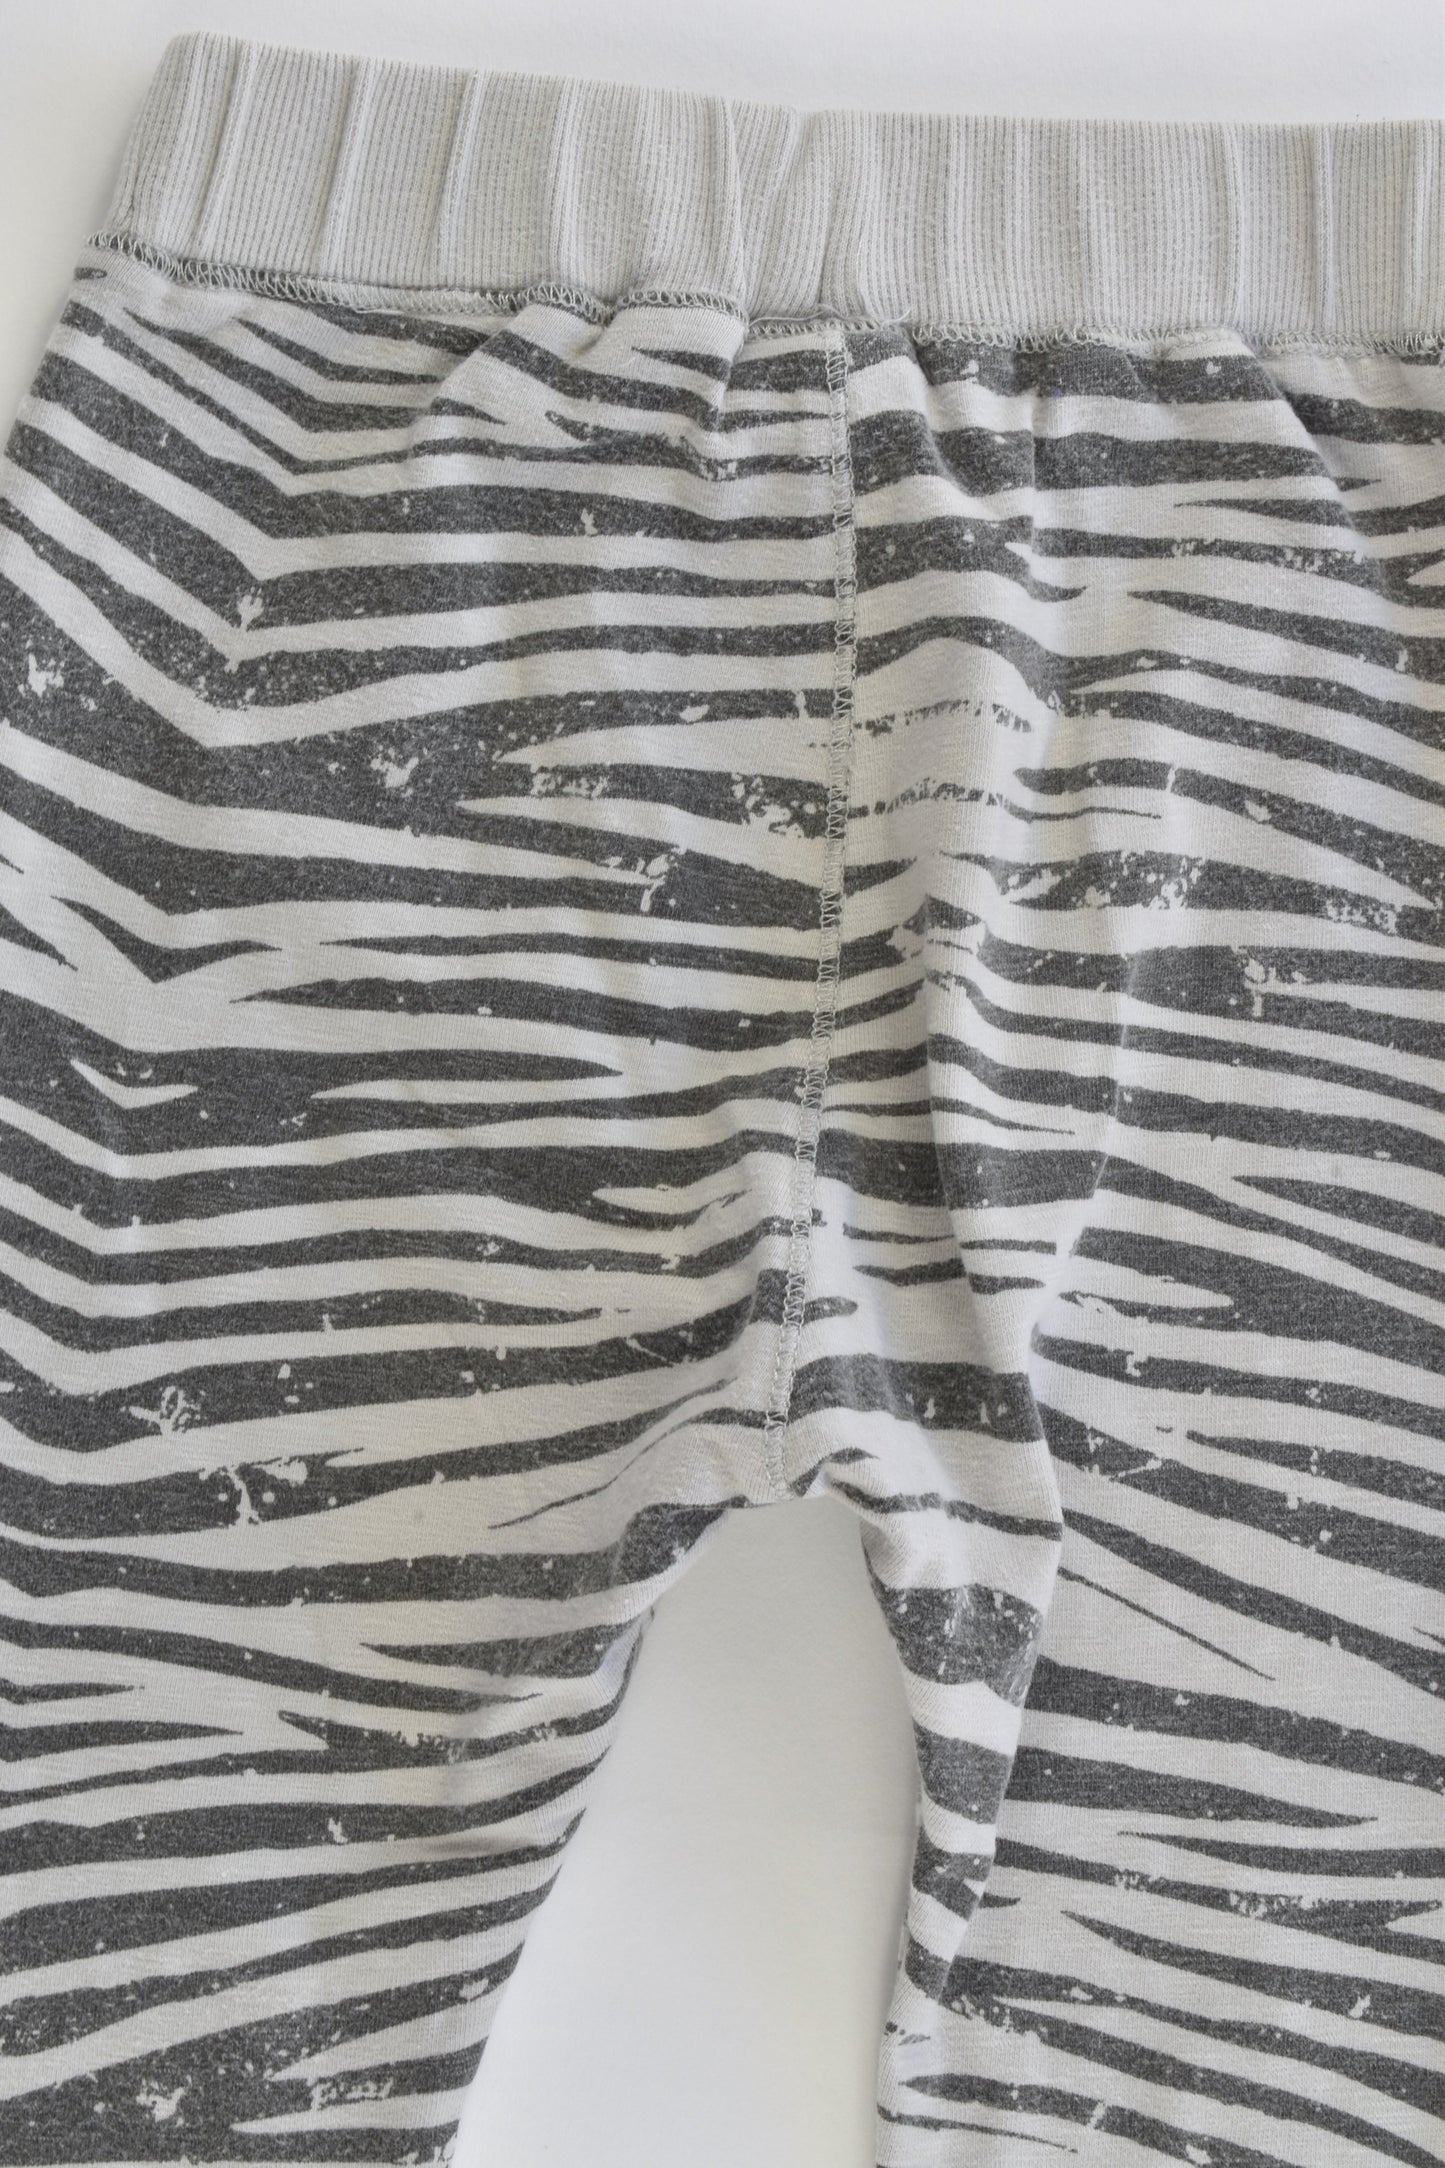 Zara Size 2/3 (98 cm) Zebra Pants